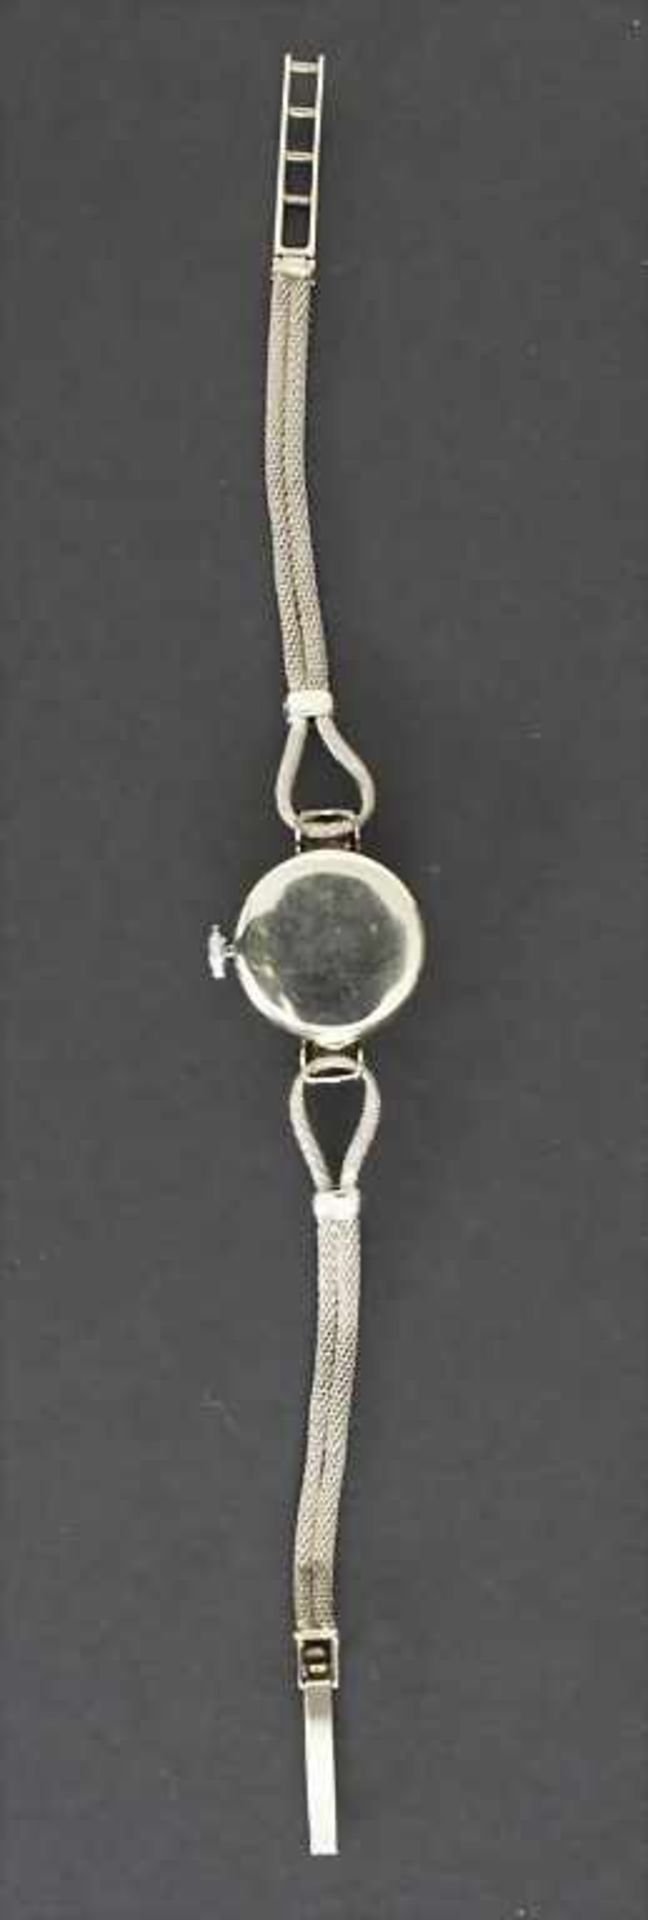 Damenarmbanduhr in Gold mit Diamanten / A ladies wristwatch in gold with diamonds, Eszeha, - Bild 3 aus 6